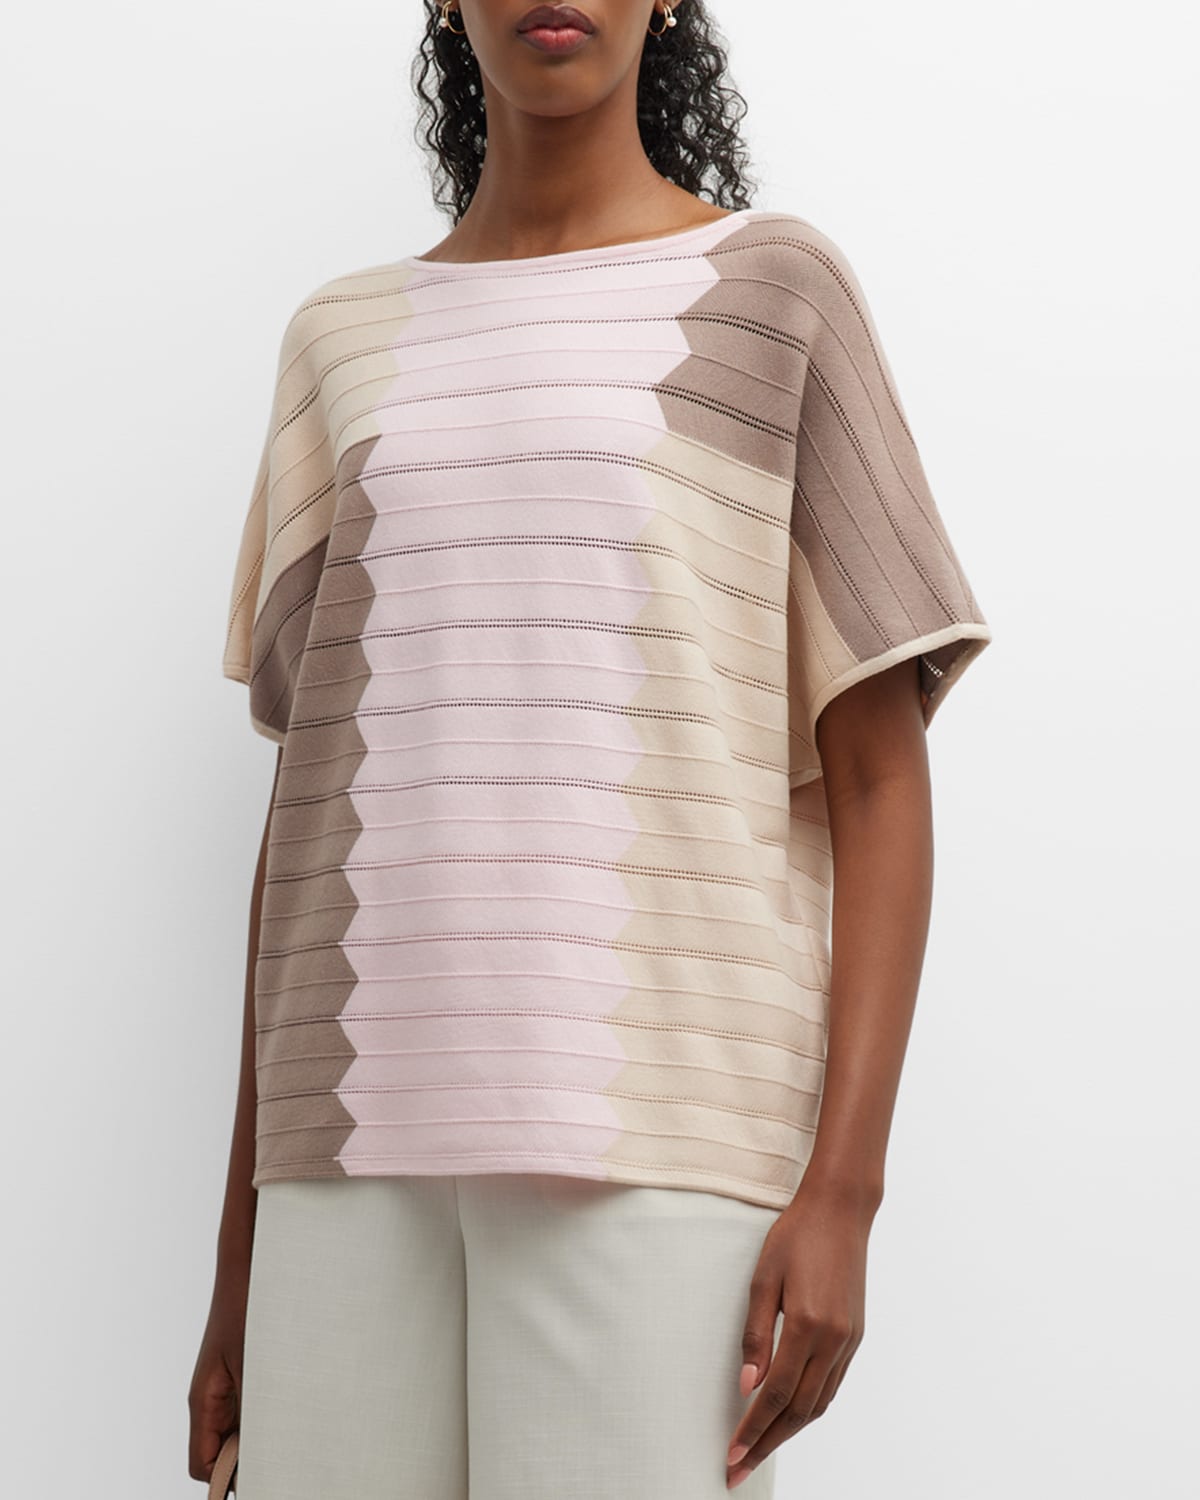 Colorblock Textured Stripe Soft Knit Tunic